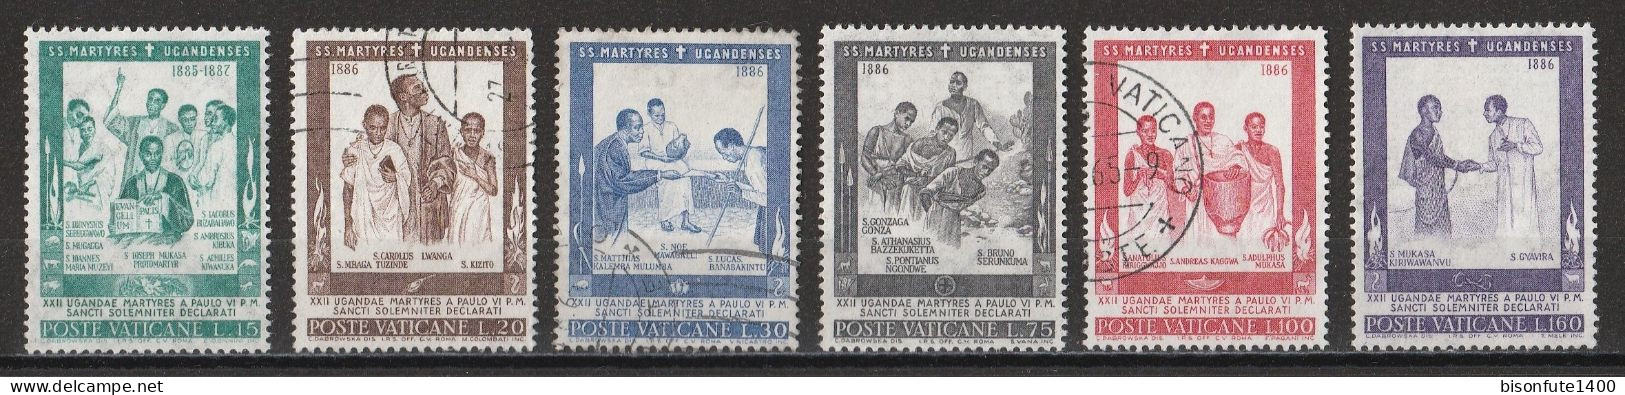 Vatican 1965 : Timbres Yvert & Tellier N° 422 - 423 - 424 - 425 - 426 - 427 - 428 - 429 - 430 Et 431 Oblitérés. - Used Stamps